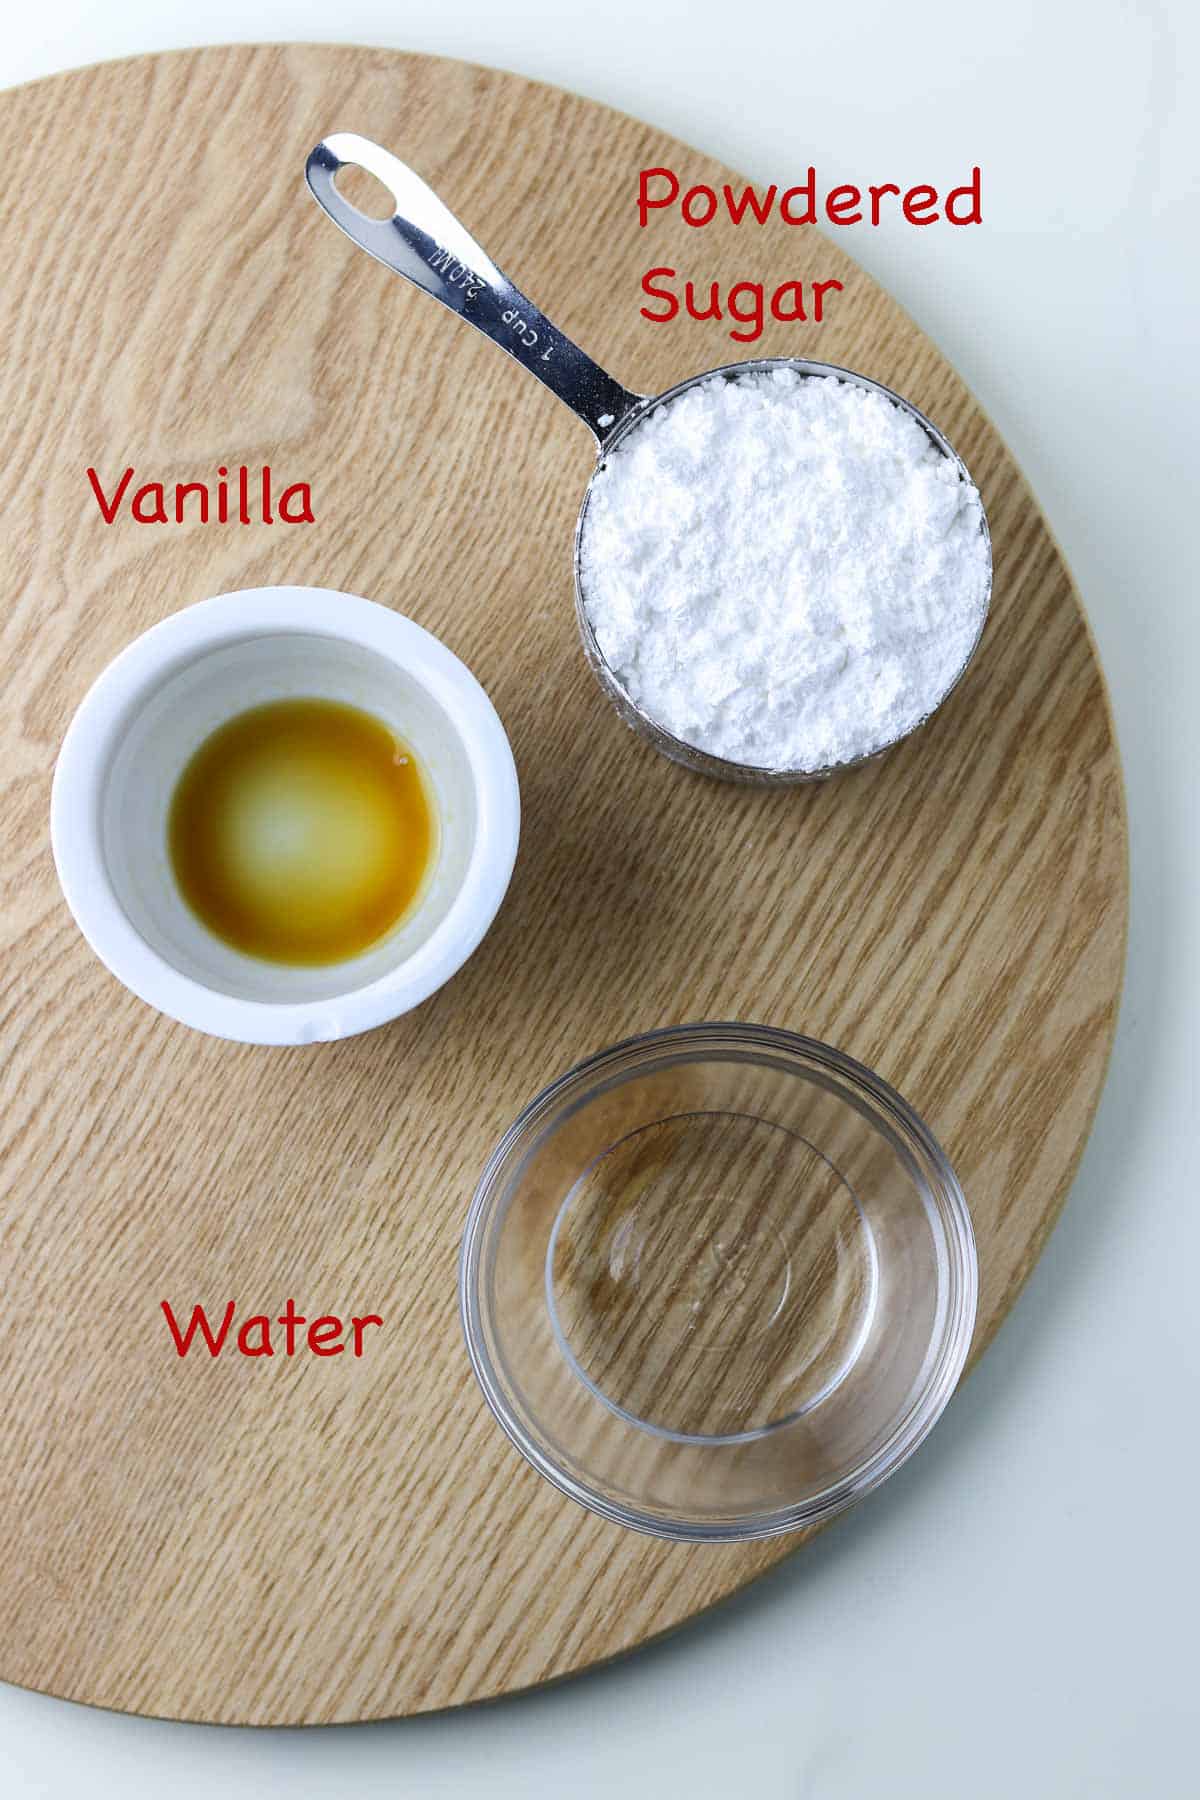 Labeled ingredients for powdered sugar glaze.